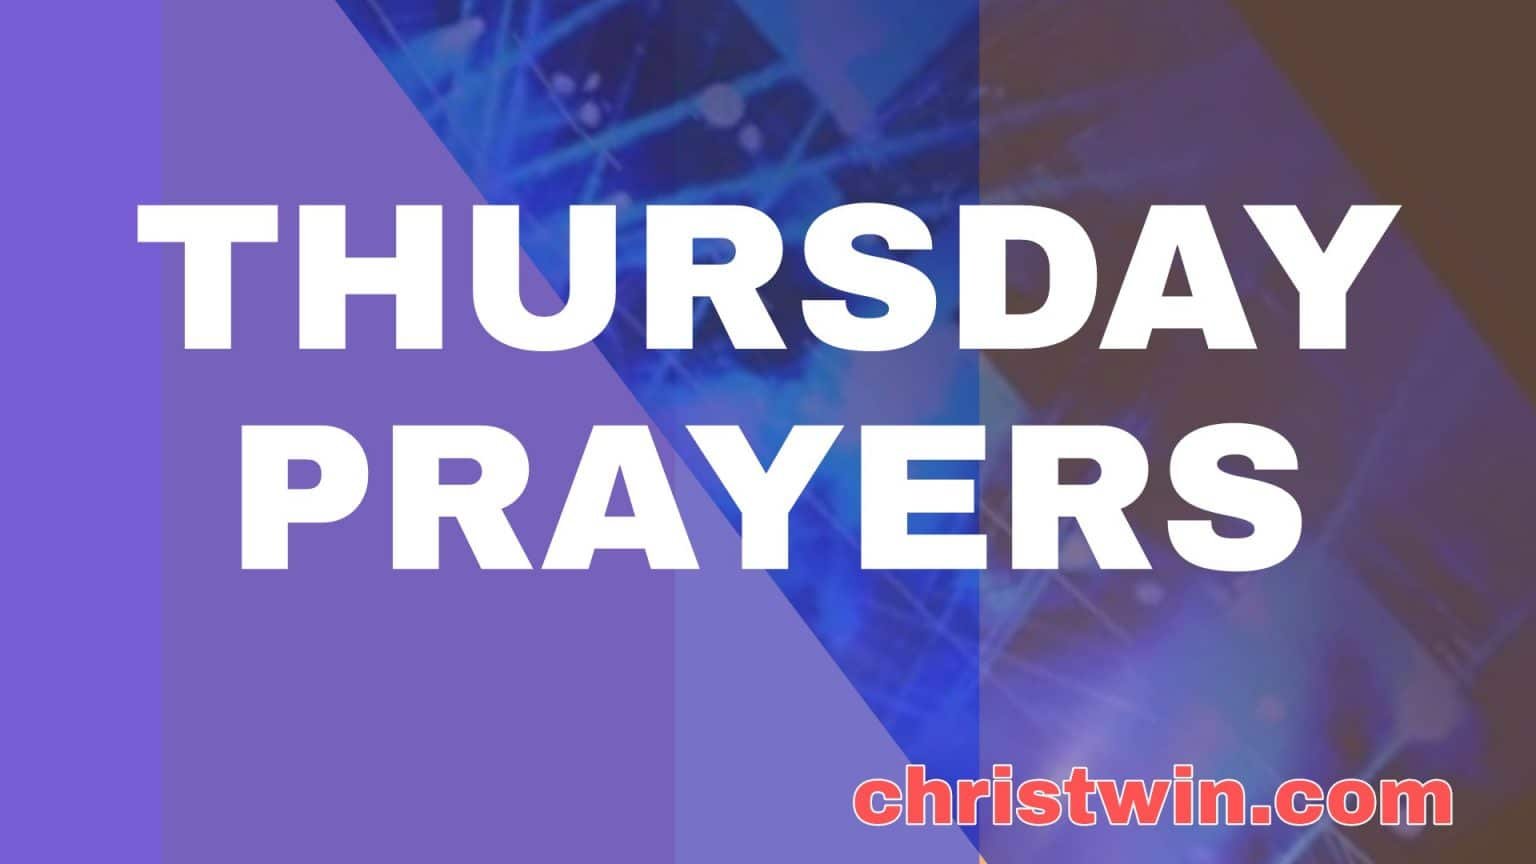 Thursday Prayer with bible verses